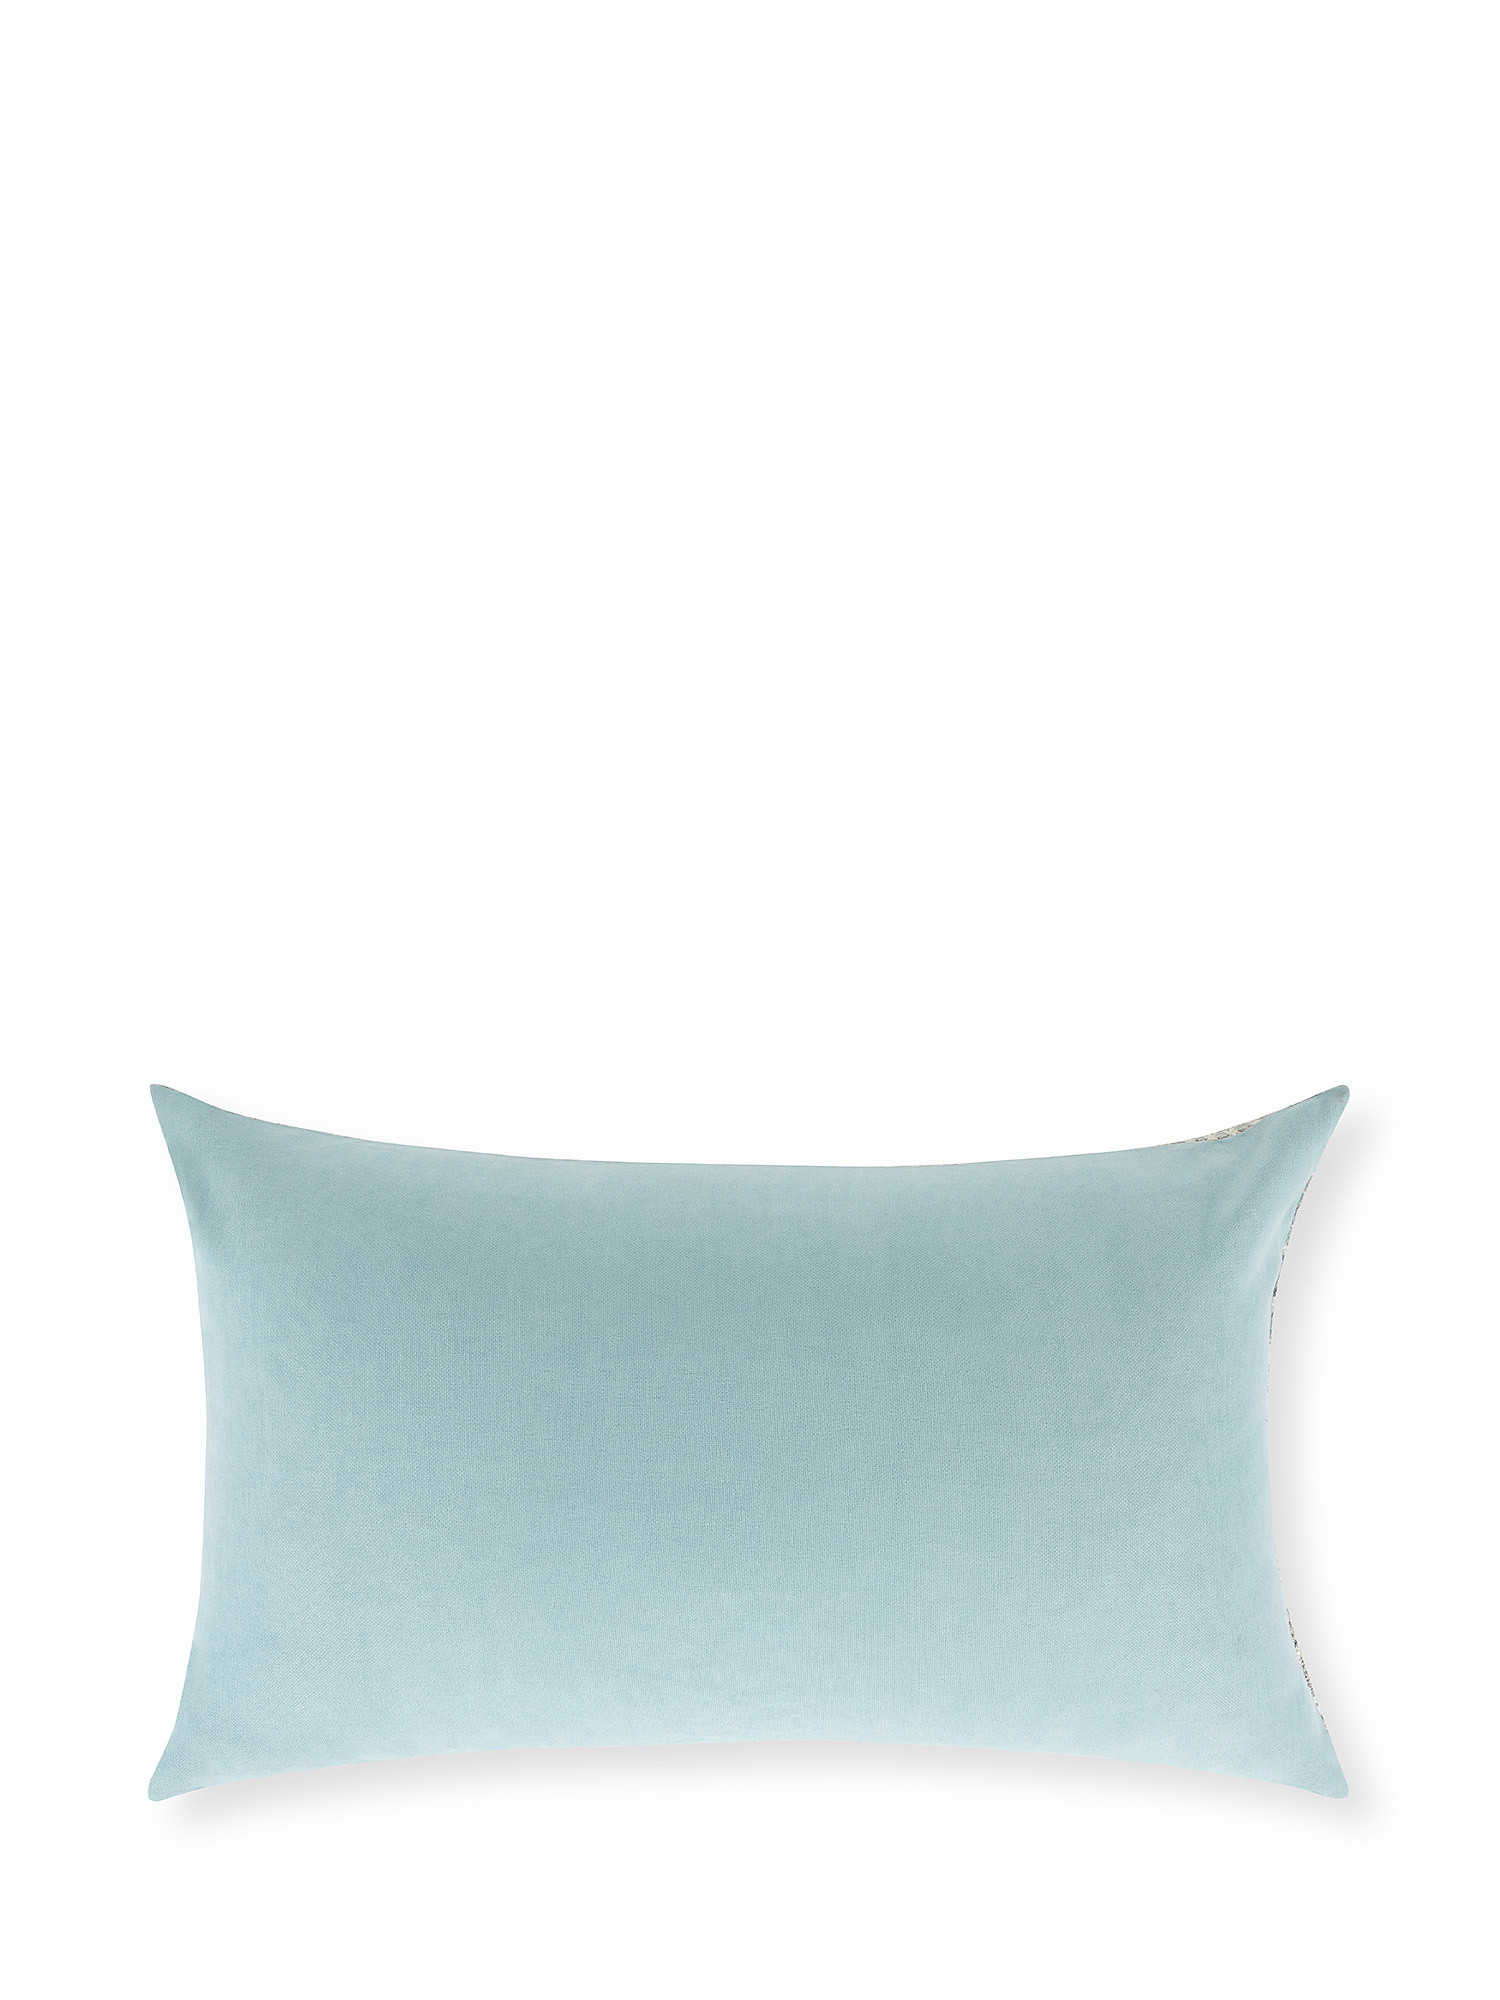 Jacquard cushion with geometric pattern 35x55cm, Grey, large image number 1